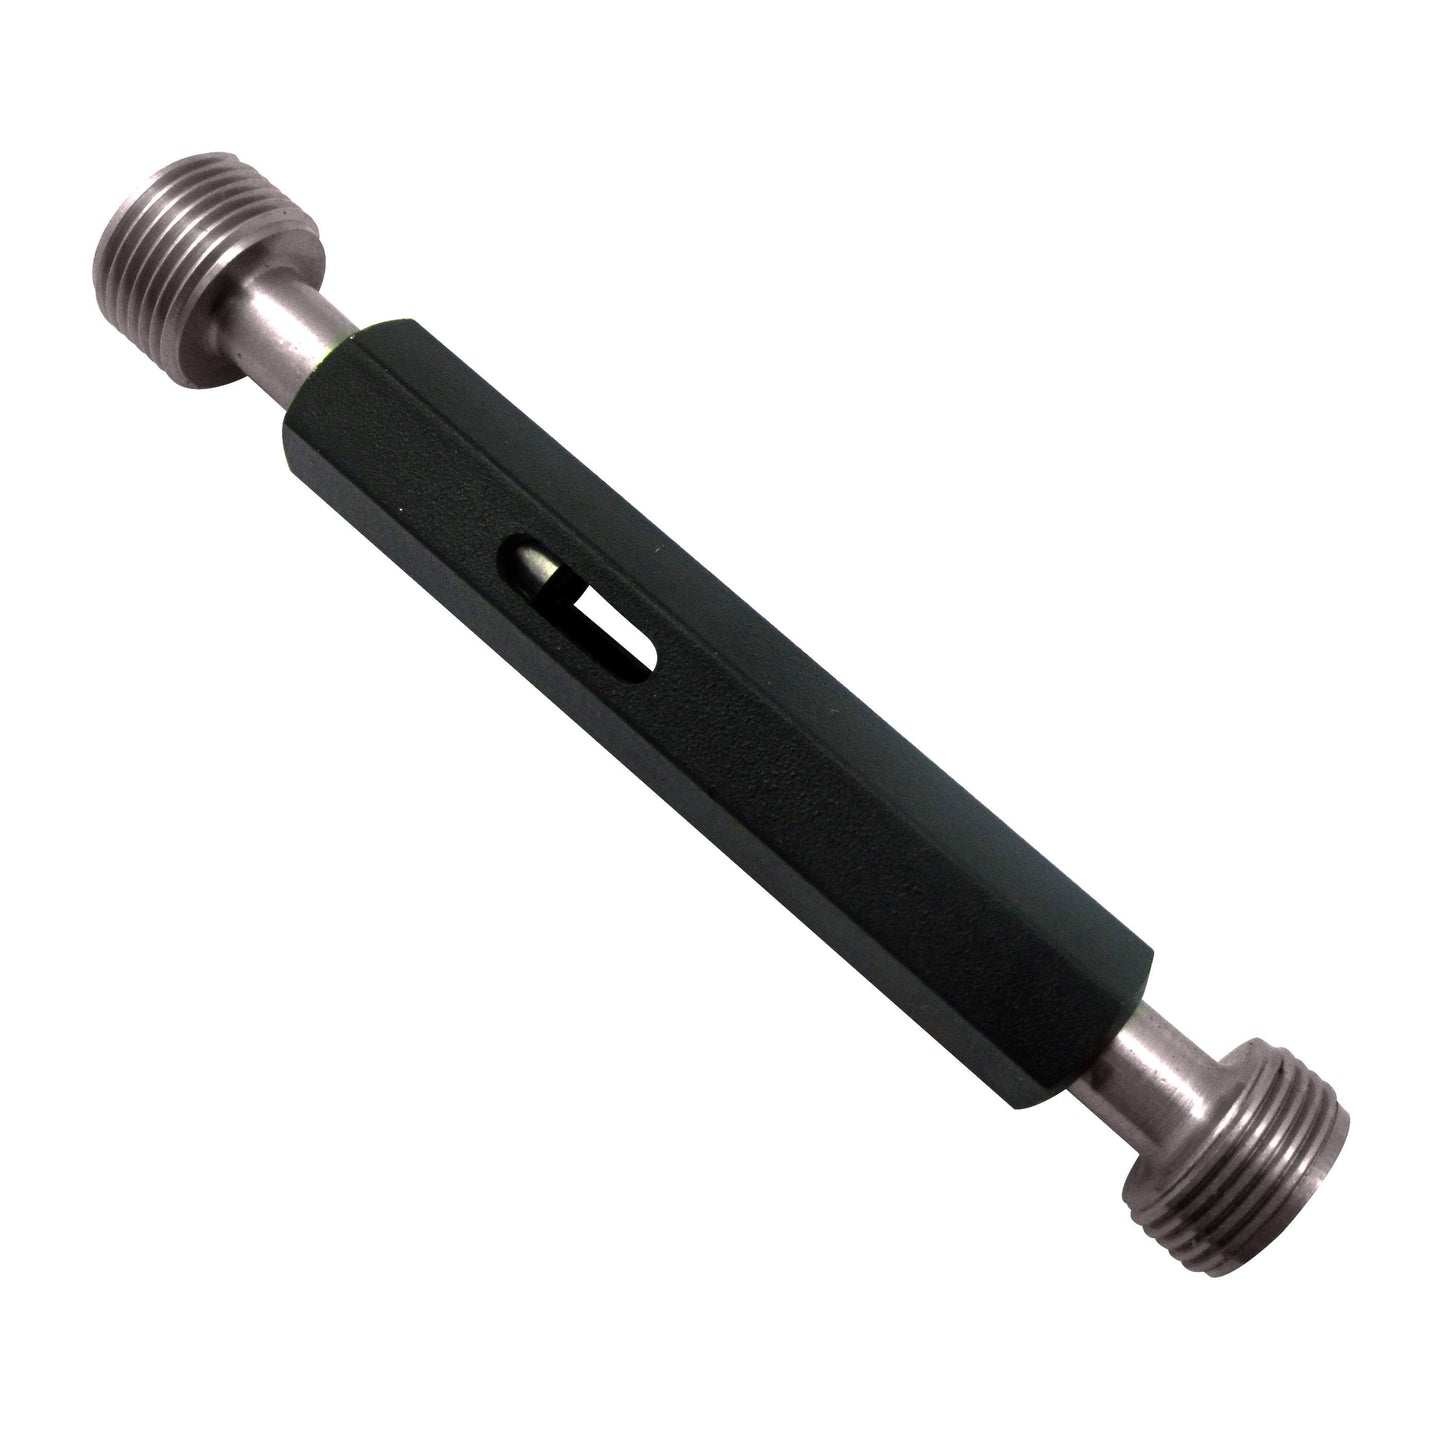 M20 x 0.5 Metric Right Hand Thread Plug Gauge